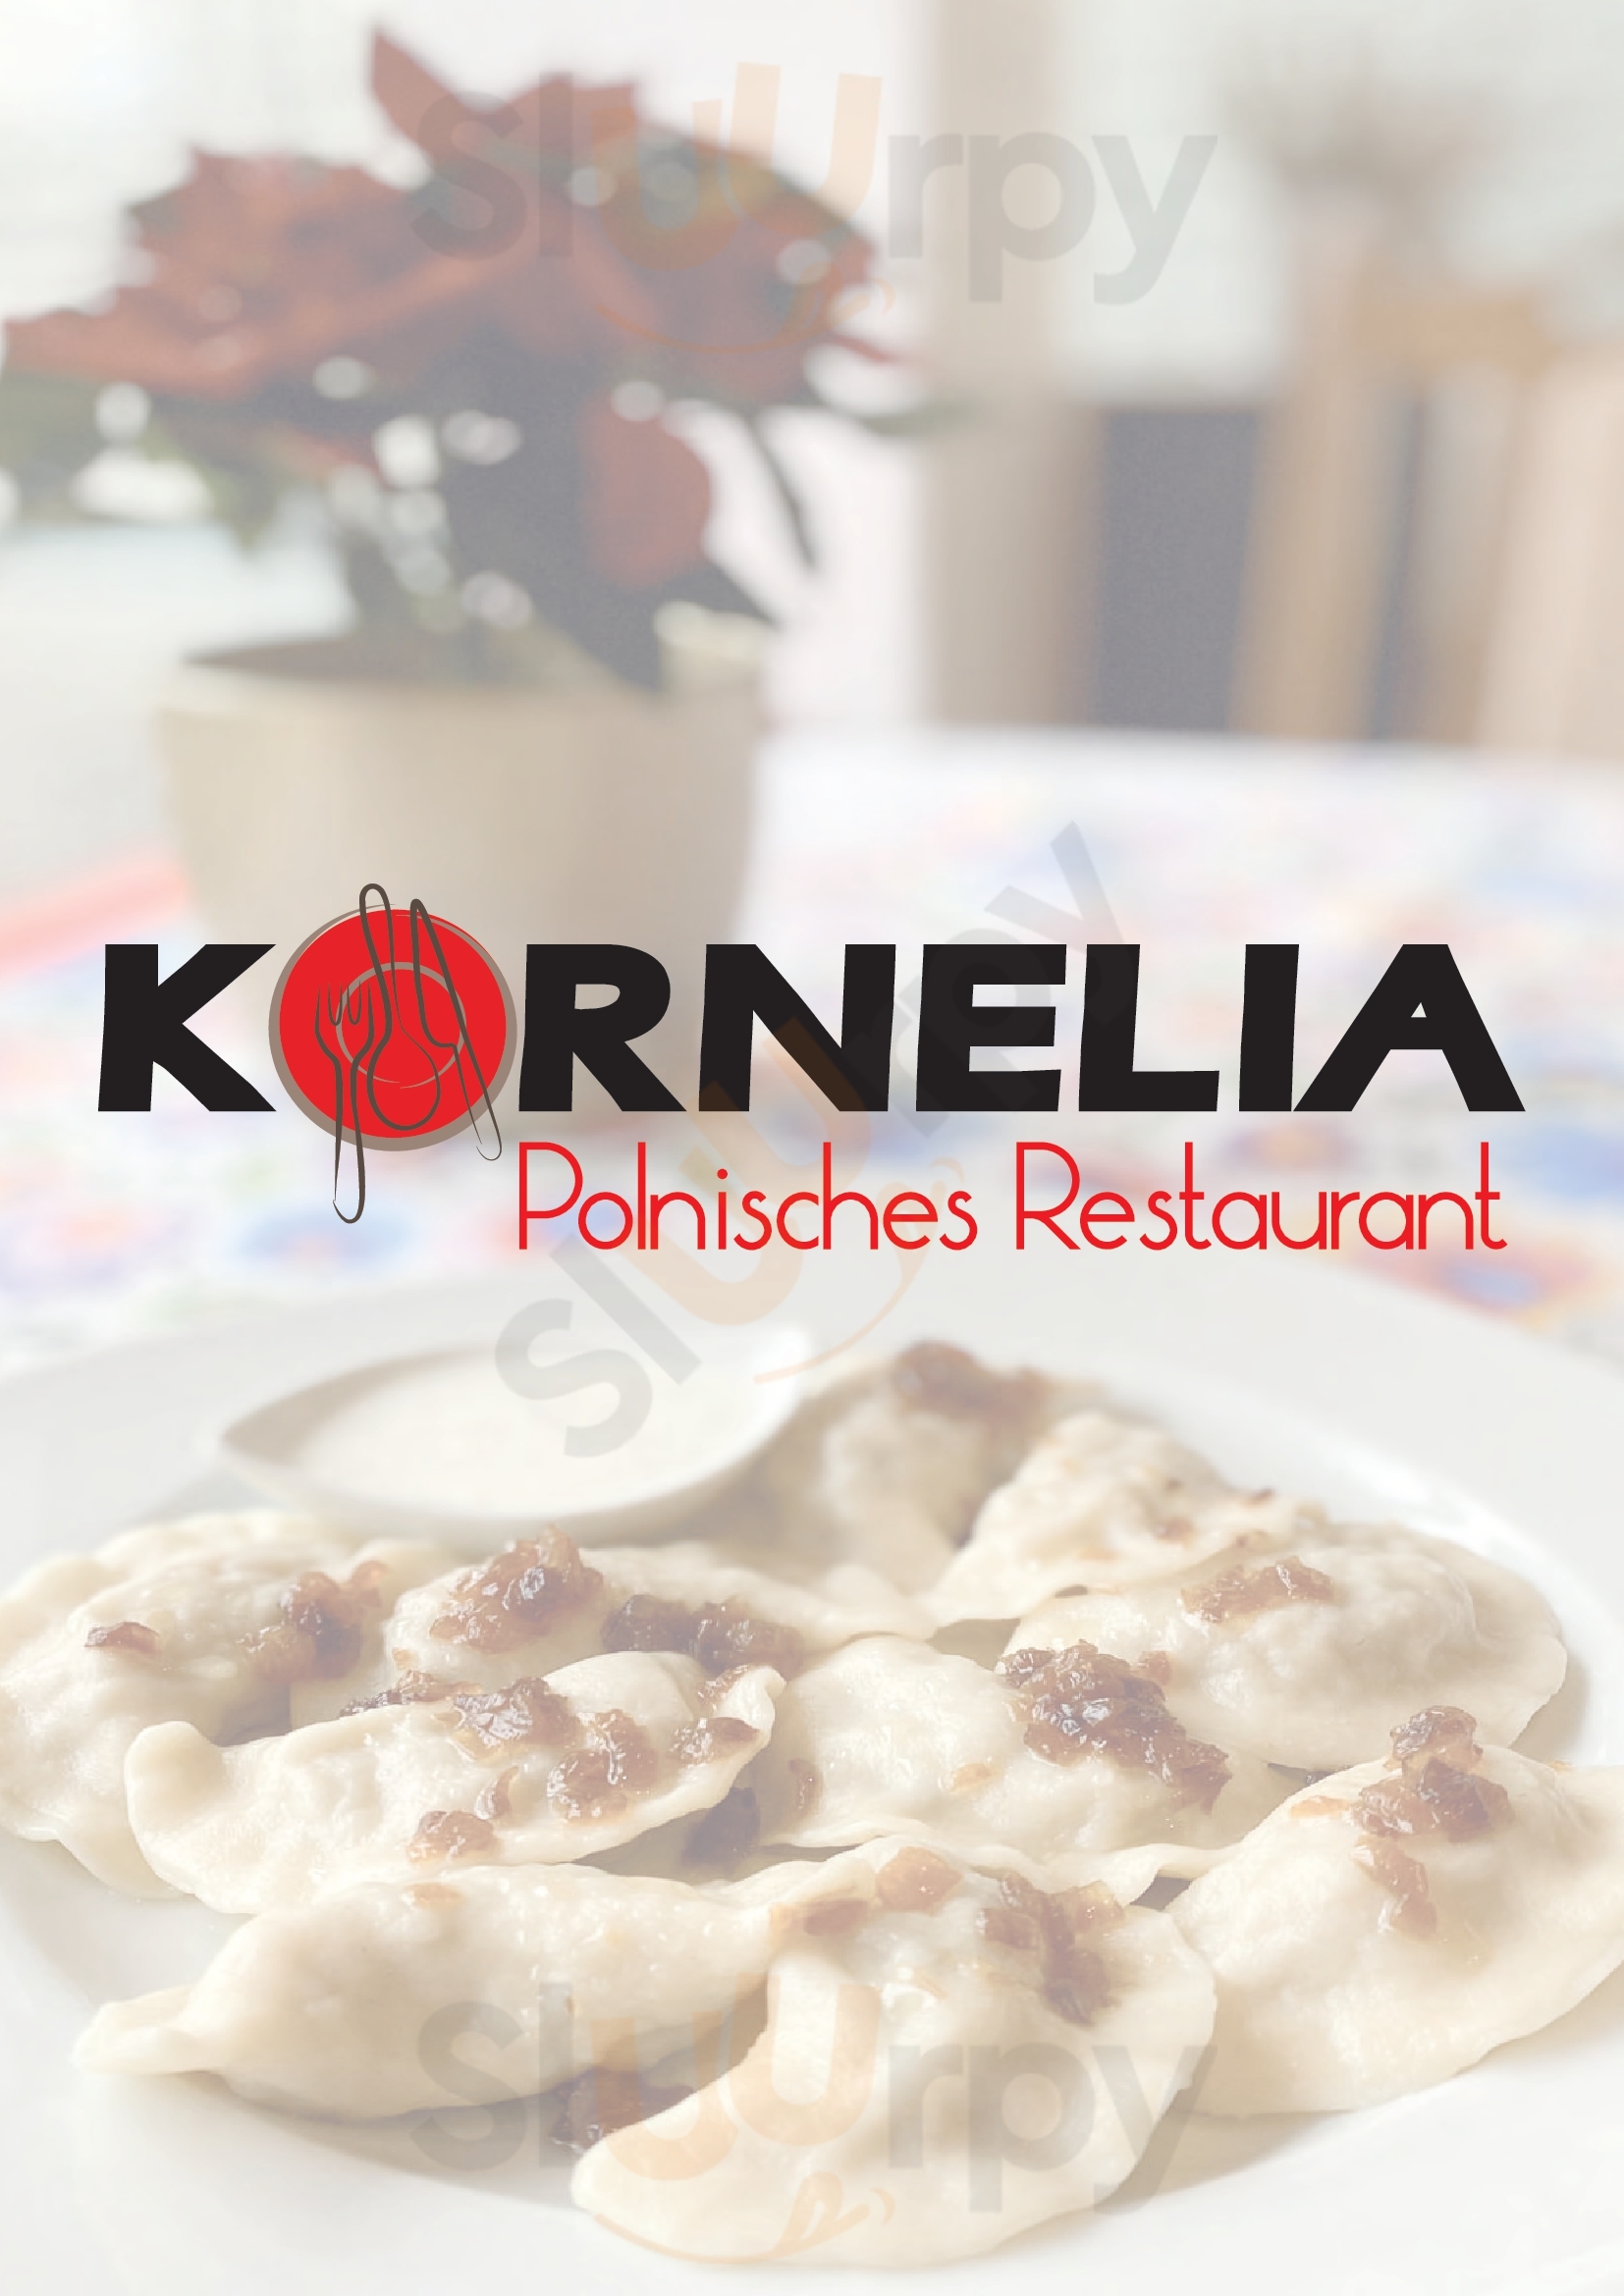 Kornelia Polnisches Restaurant Berlin Menu - 1